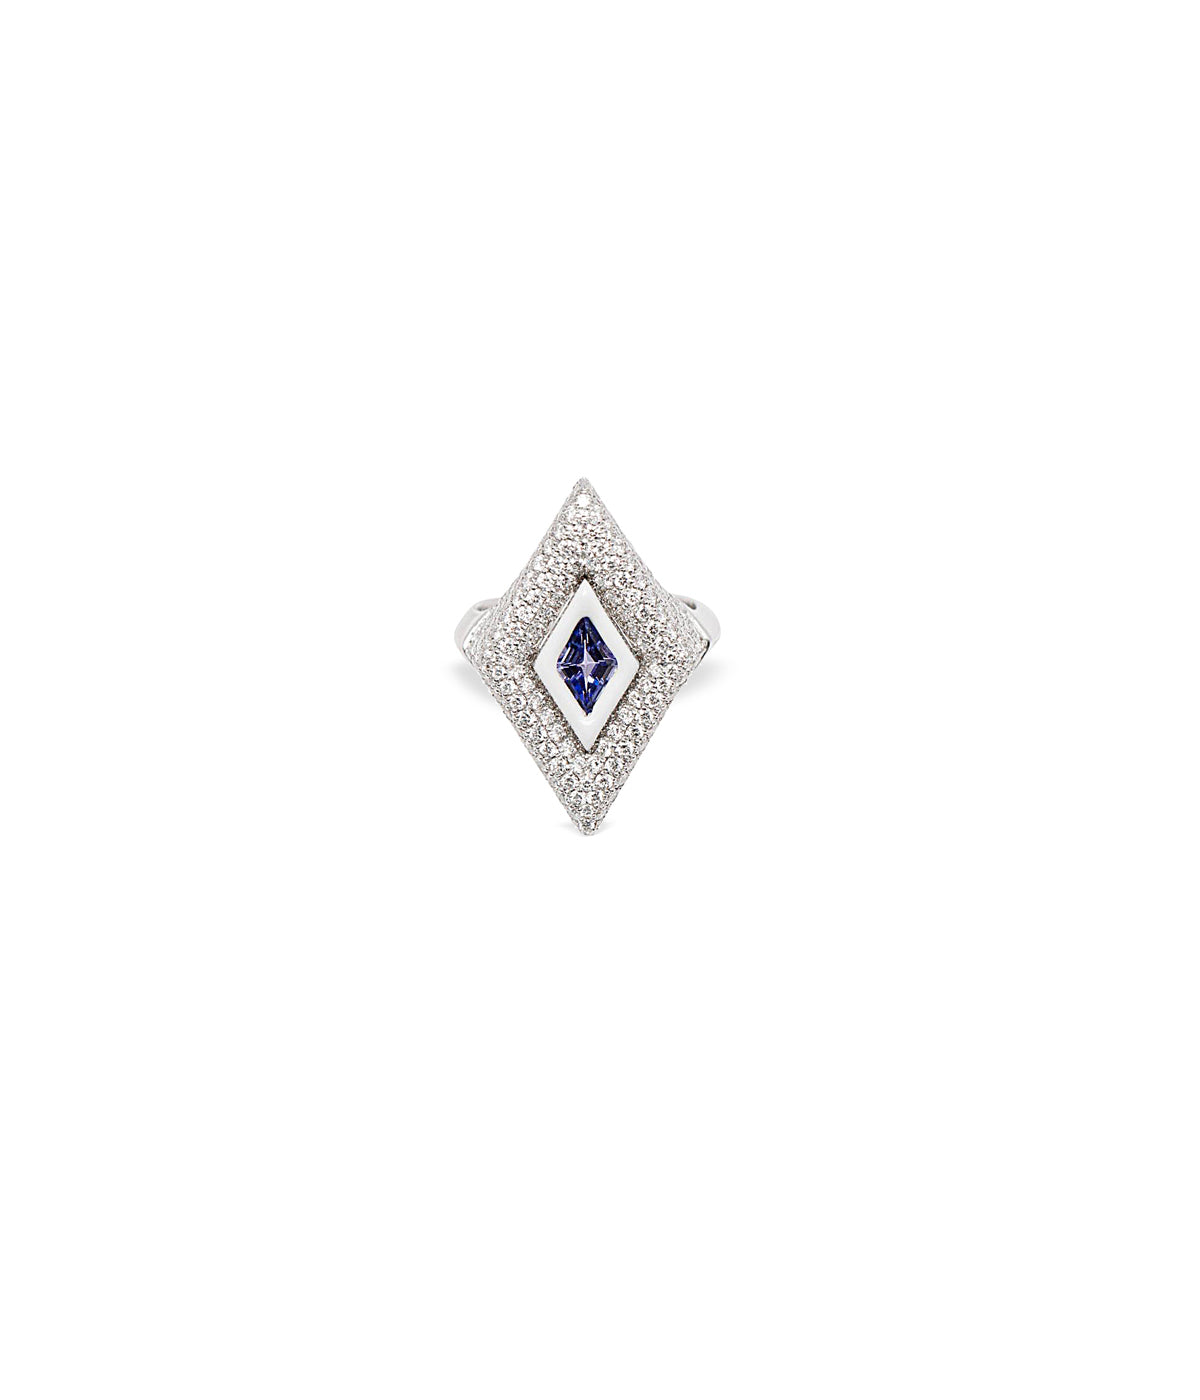 Kite 18k white gold, diamond and tanzanite ring